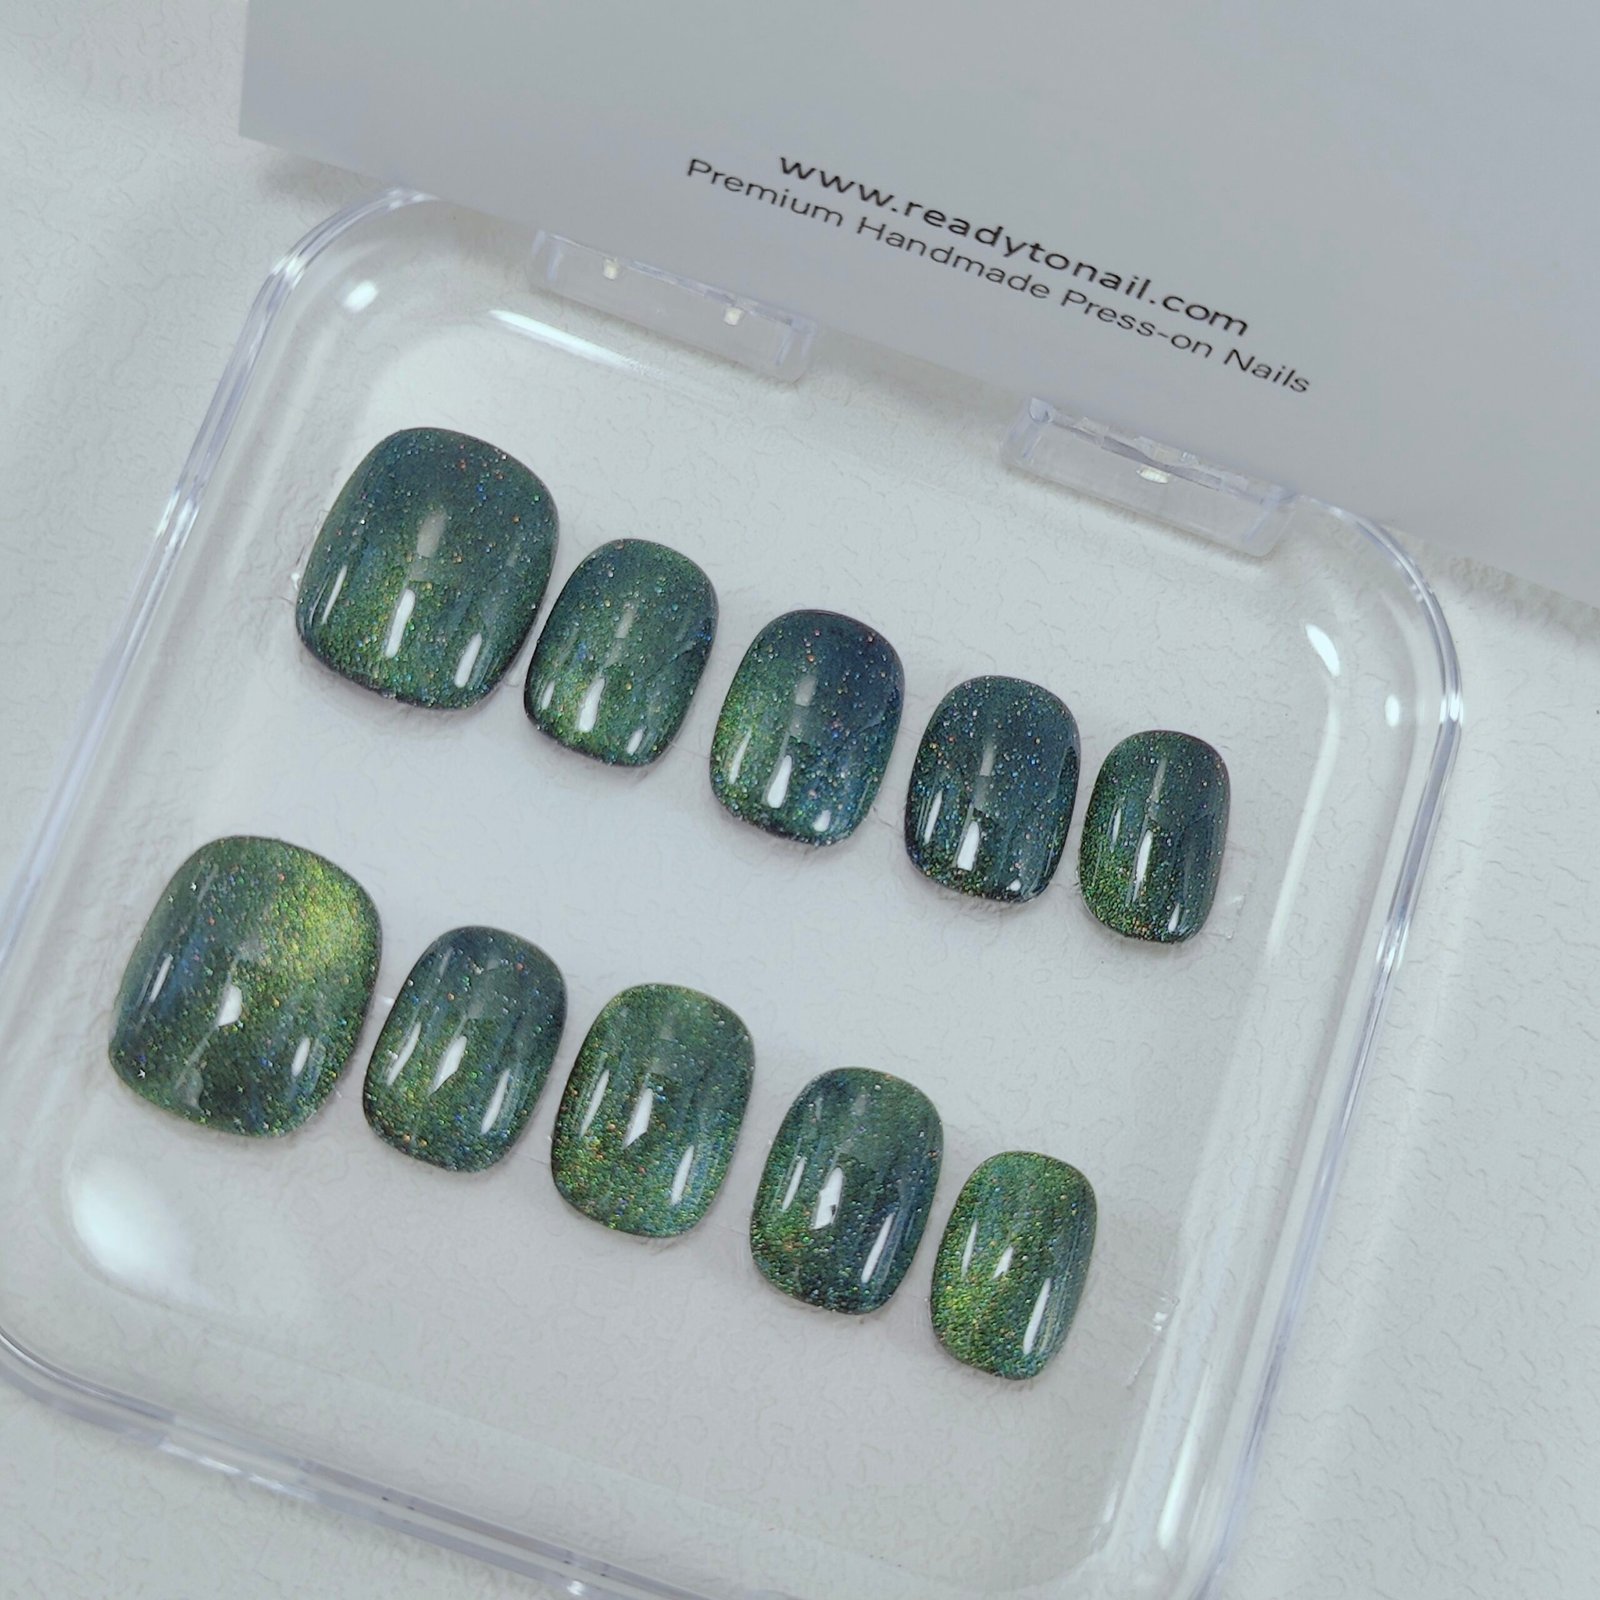 Buy Online Best Sparkly Dark Green Nails | Emerald Dark Green Nail Extensions - Readytonail